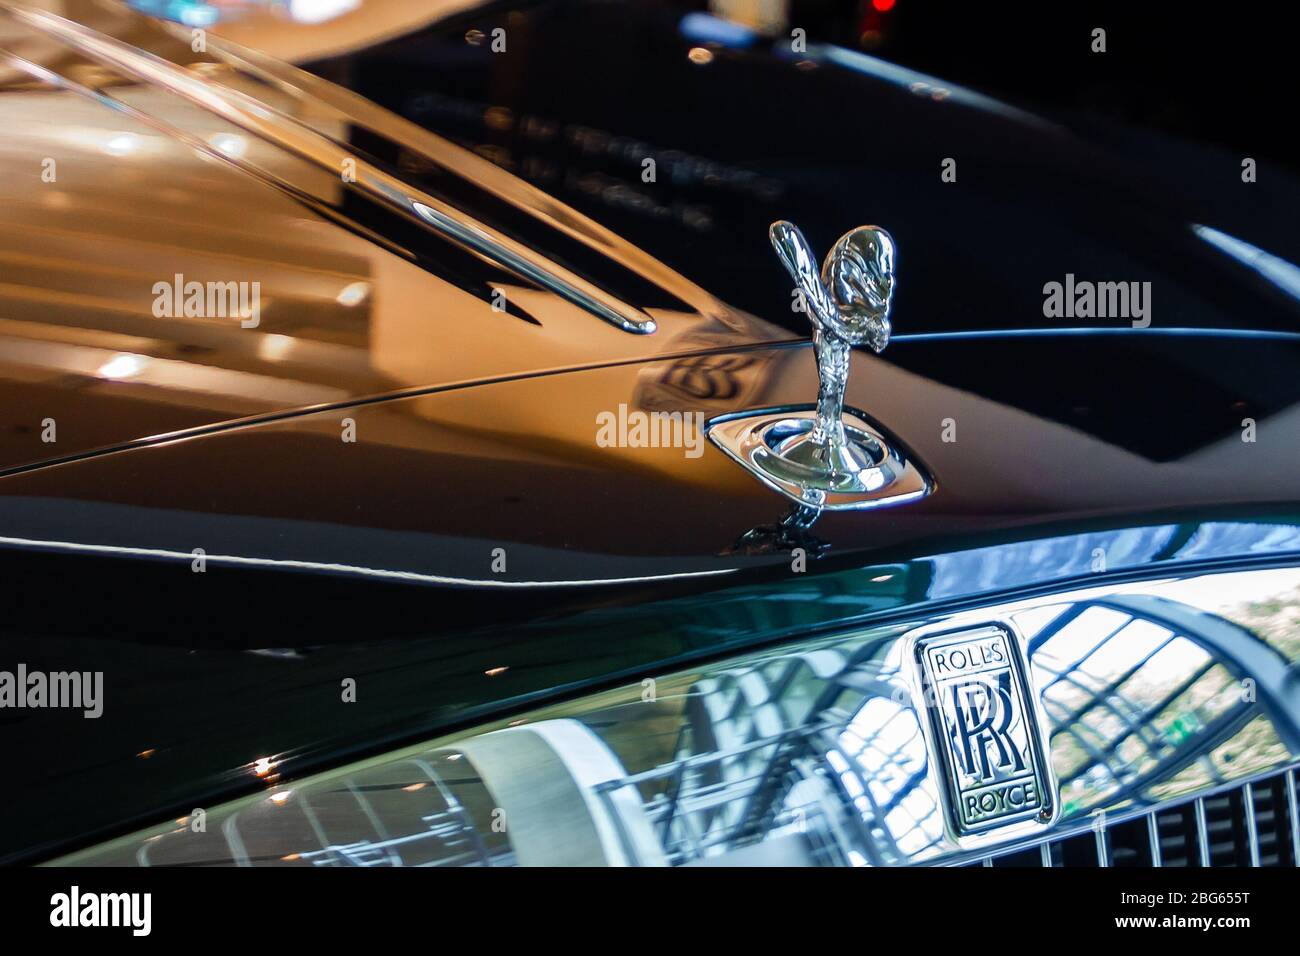 Rolls Royce, The Spirit of Ecstasy figure on a bonnet .BMW Welt, Munich, Germany, March 2020 Stock Photo